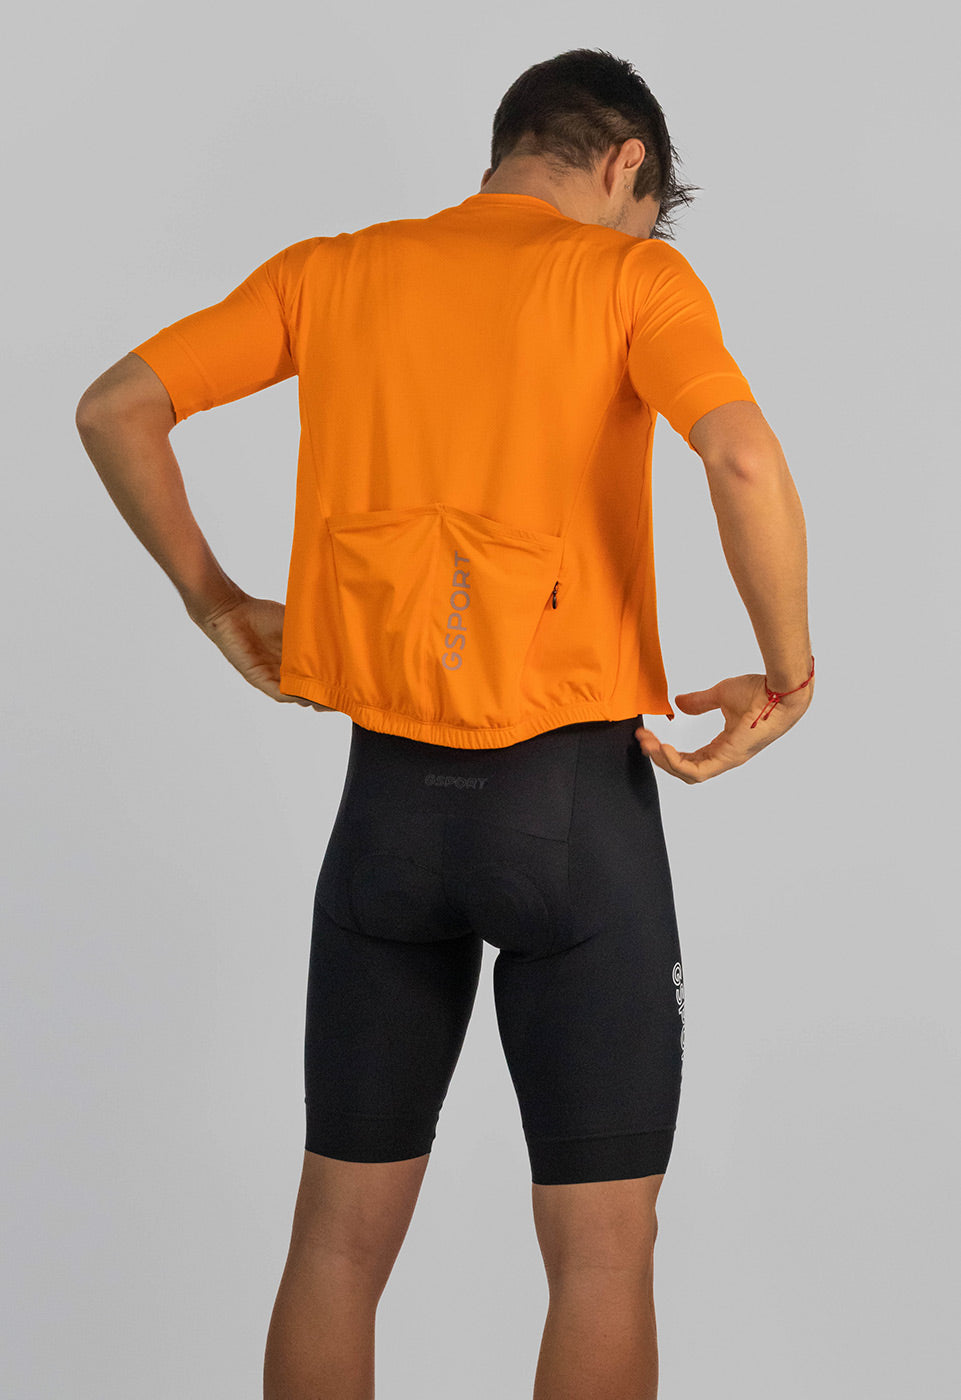 maillot colour orange man short gsport